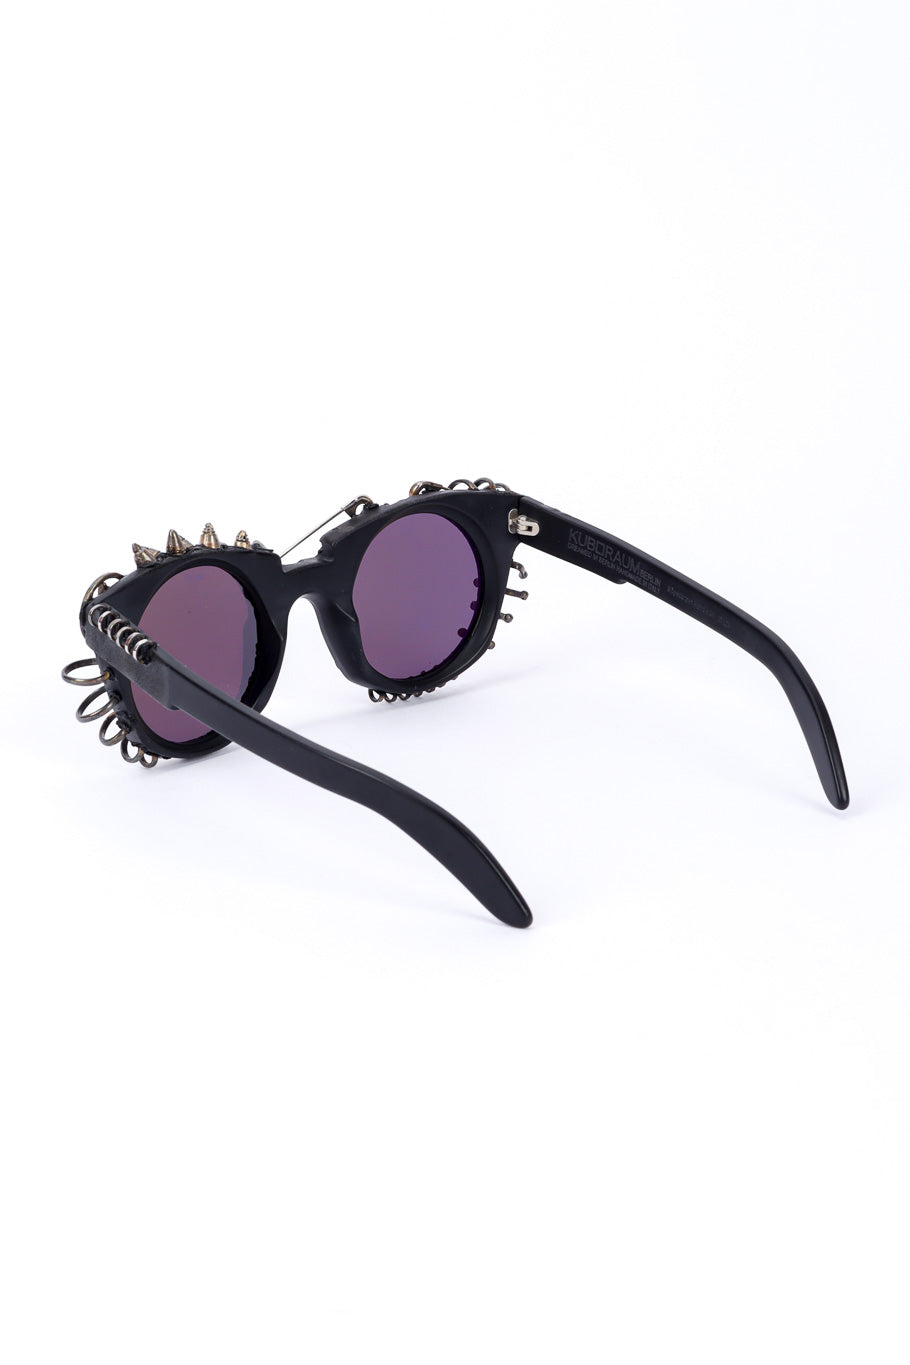 Anarchy sunglasses by Kuboraum on white background inside lenses @recessla